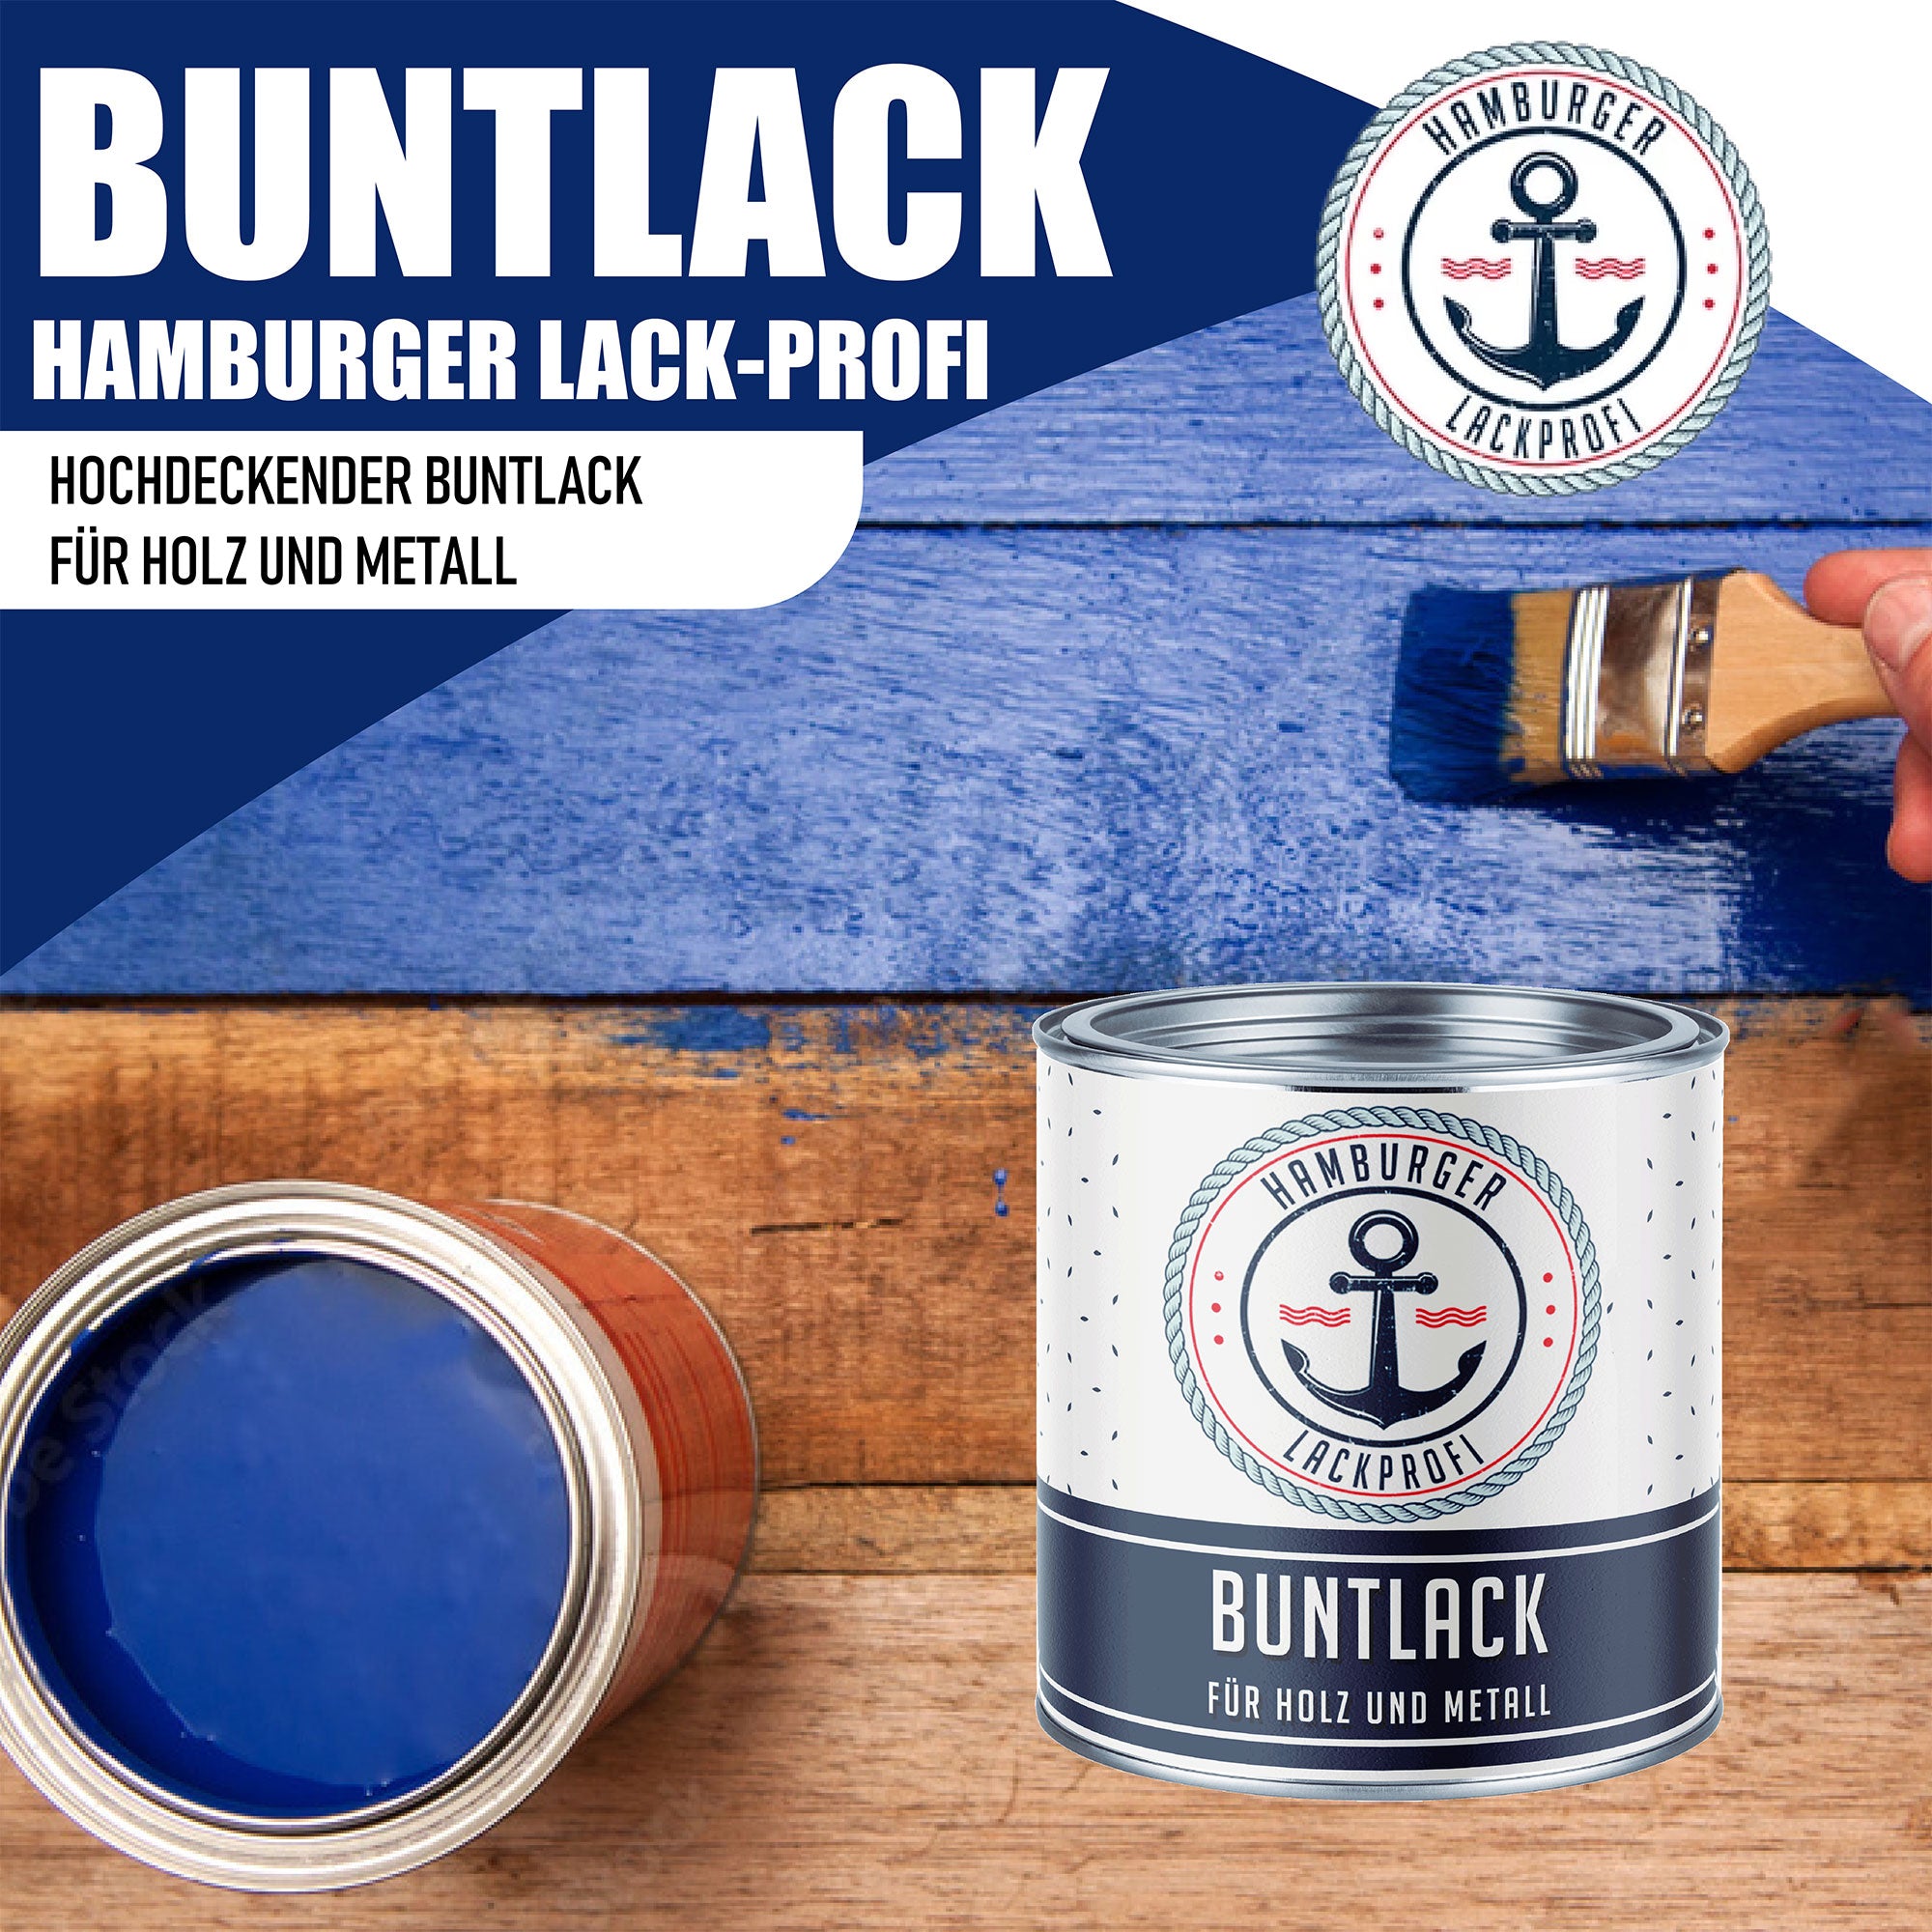 Hamburger Lack-Profi Buntlack Goldgelb RAL 1004 - Robuster Kunstharzlack - Hamburger Lack-Profi